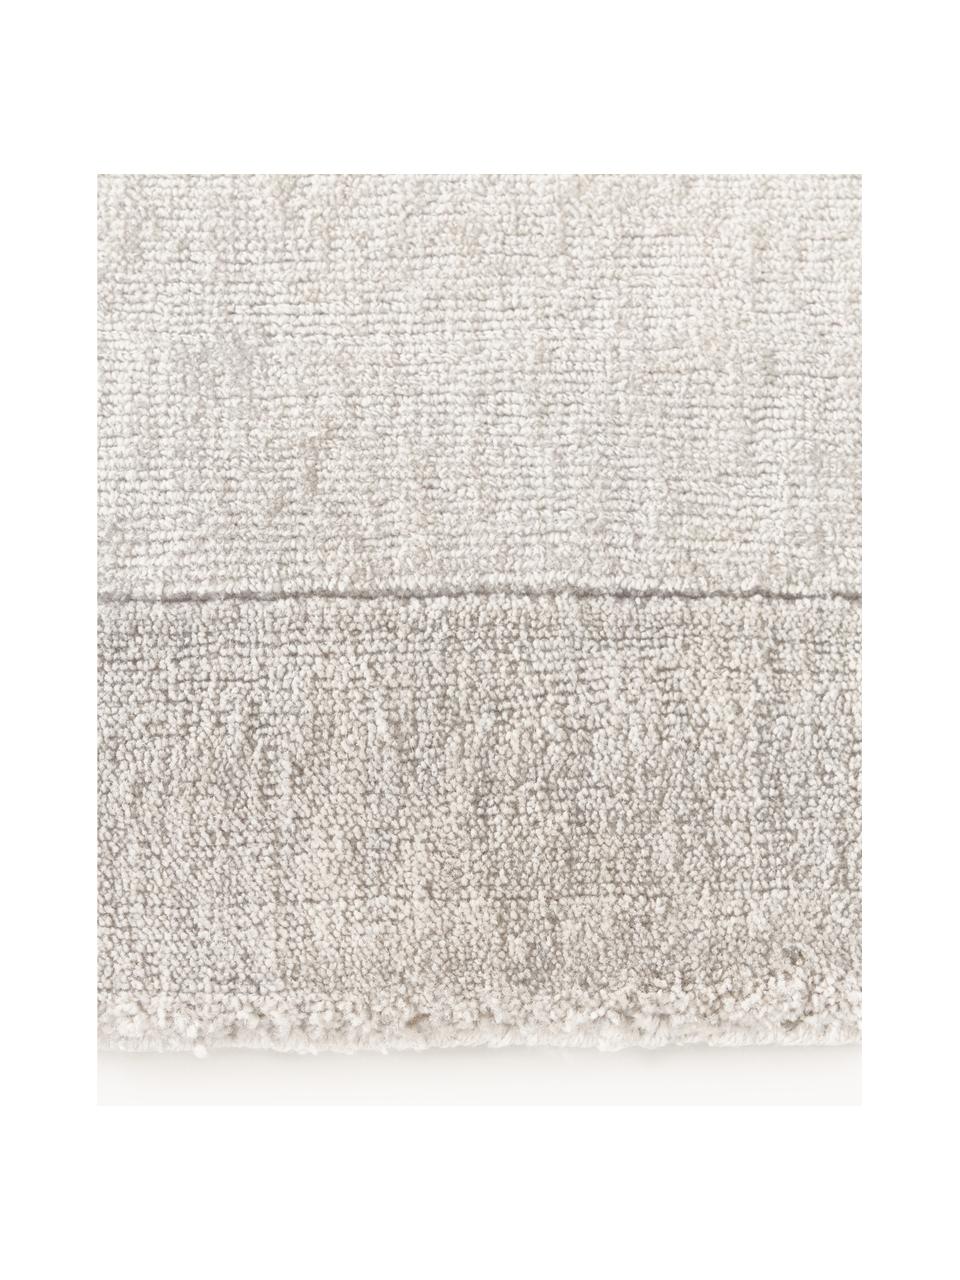 Tapis chatoyant Kari, 100 % polyester, certifié GRS, Tons gris, larg. 80 x long. 150 cm (taille XS)